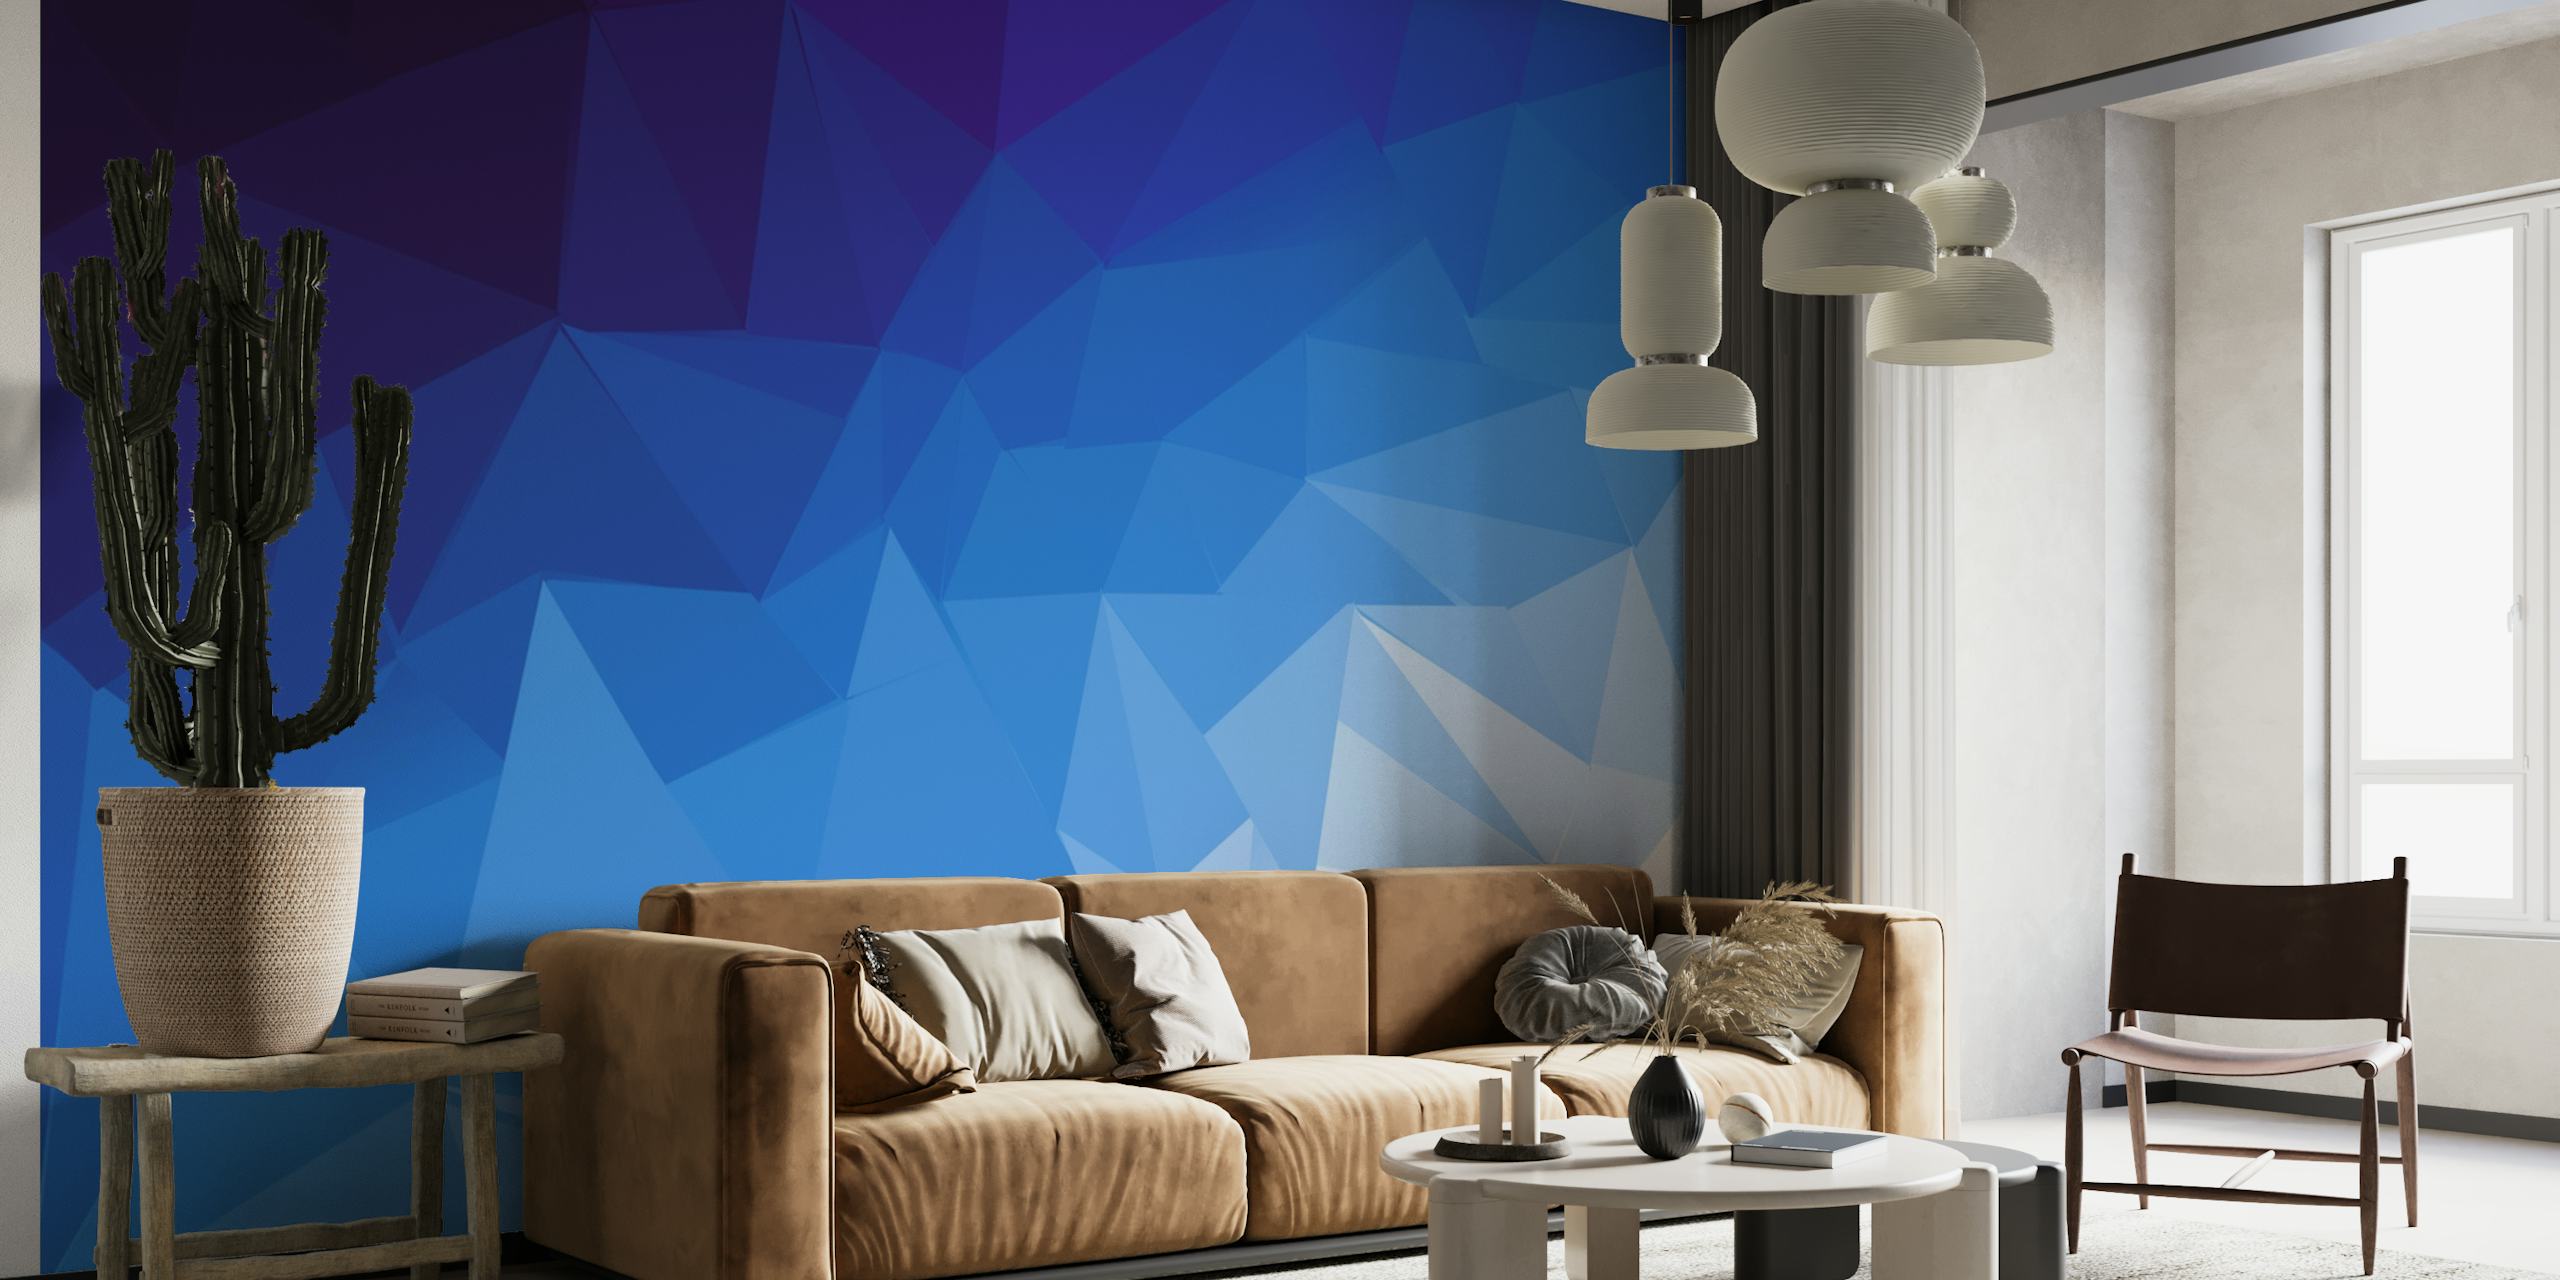 Abstrakt geometrisk hav-inspireret vægmaleri i blå nuancer.